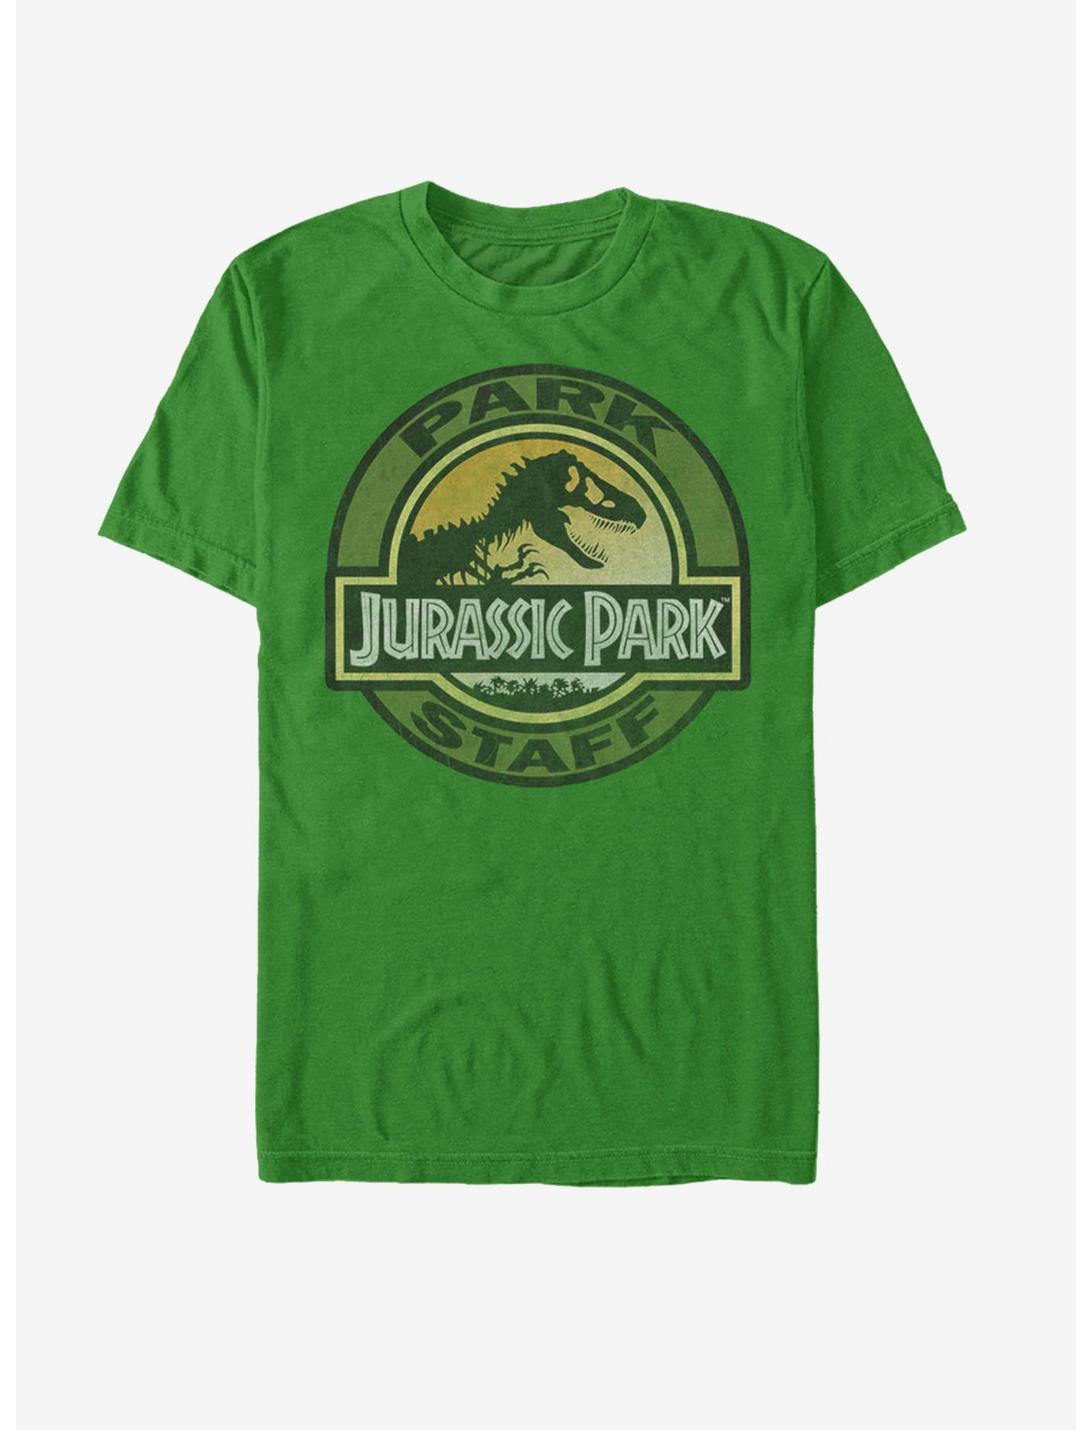 Jurassic Park Park Staff T-Shirt, KELLY, hi-res